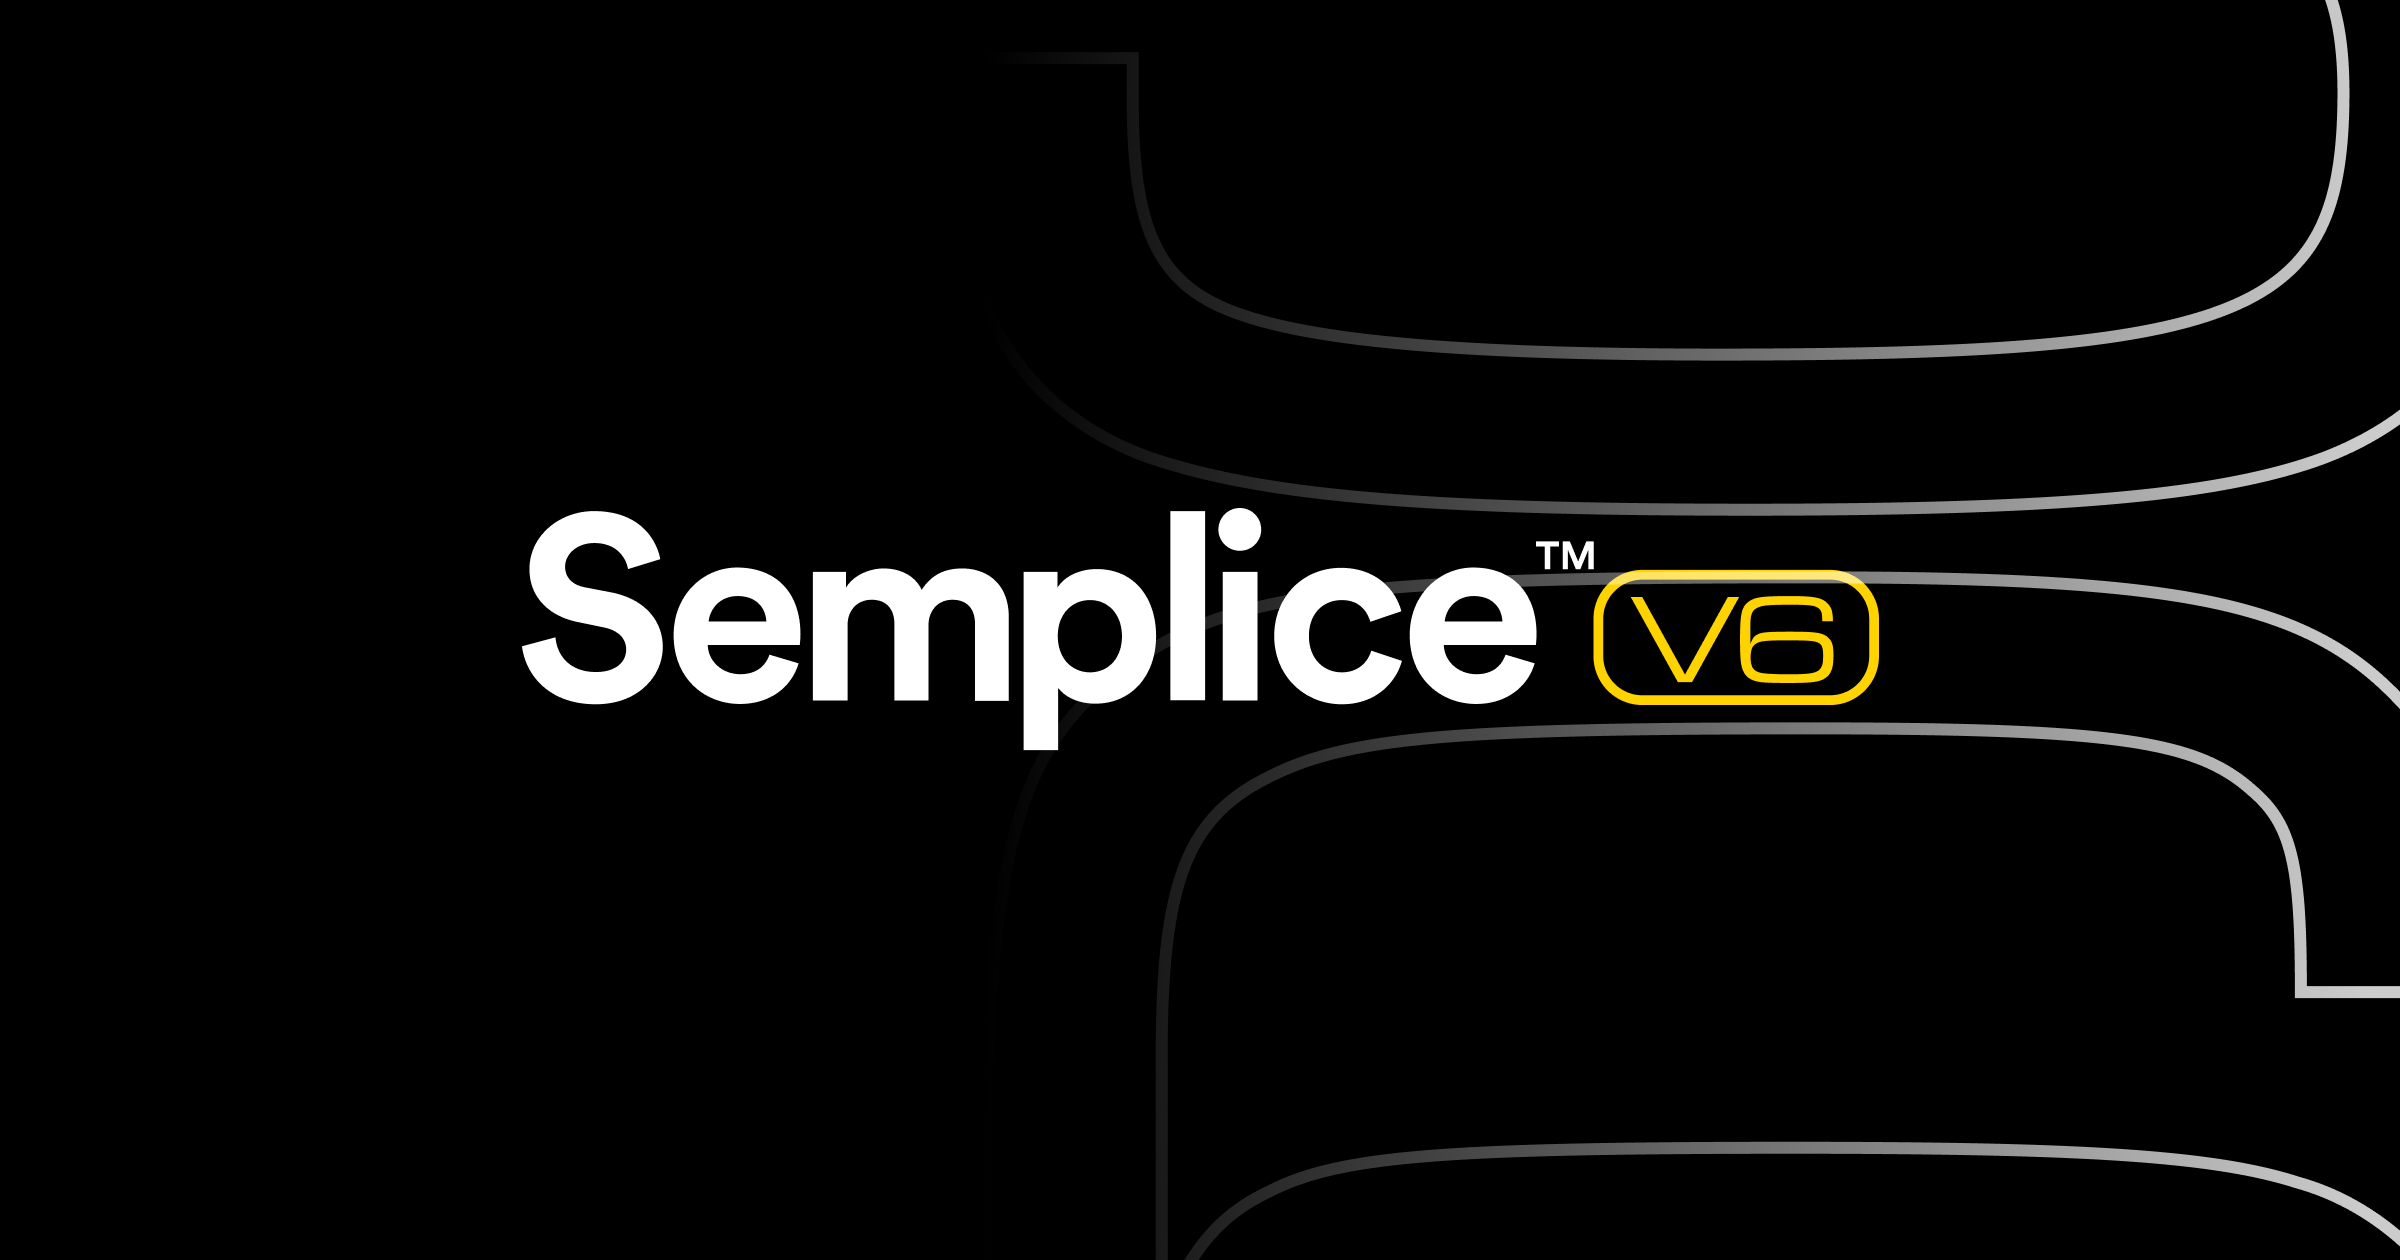 Semplice 6 — Build your portfolio with pride